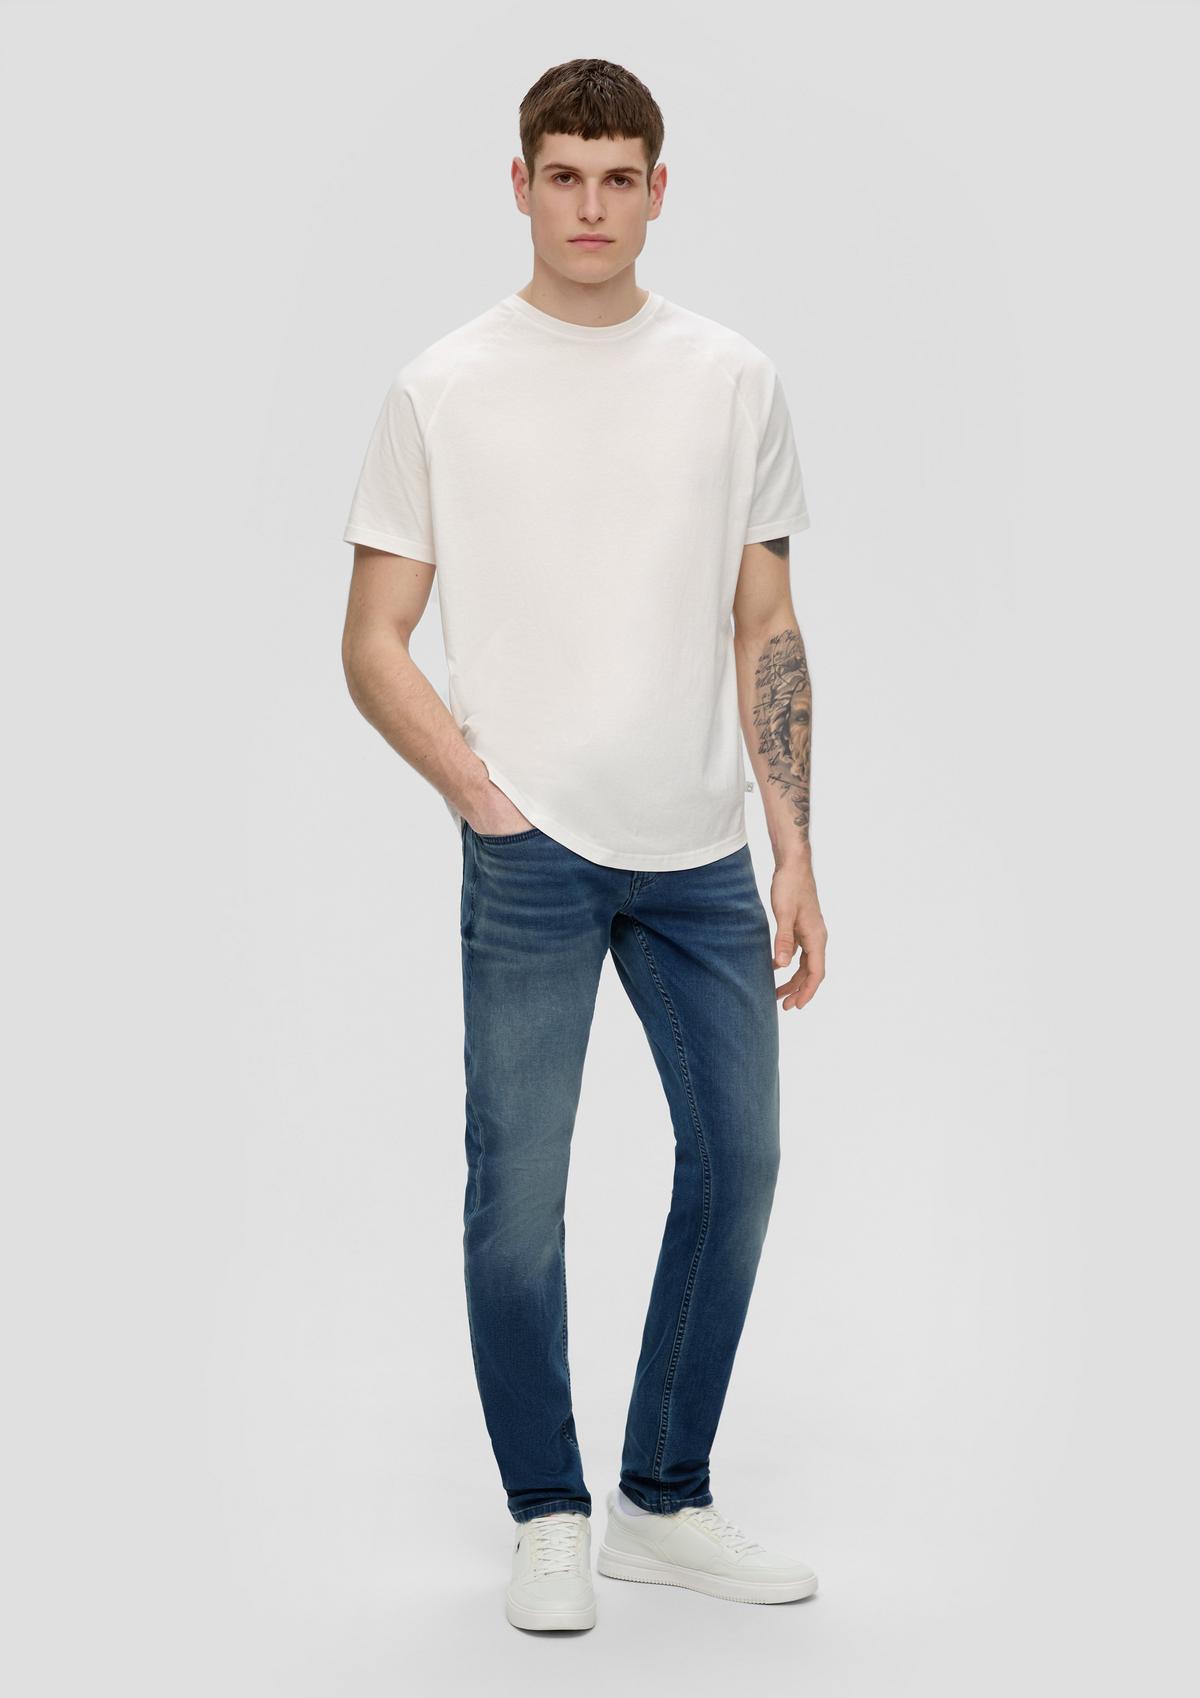 Jeans Rick / slim fit / mid rise / slim leg